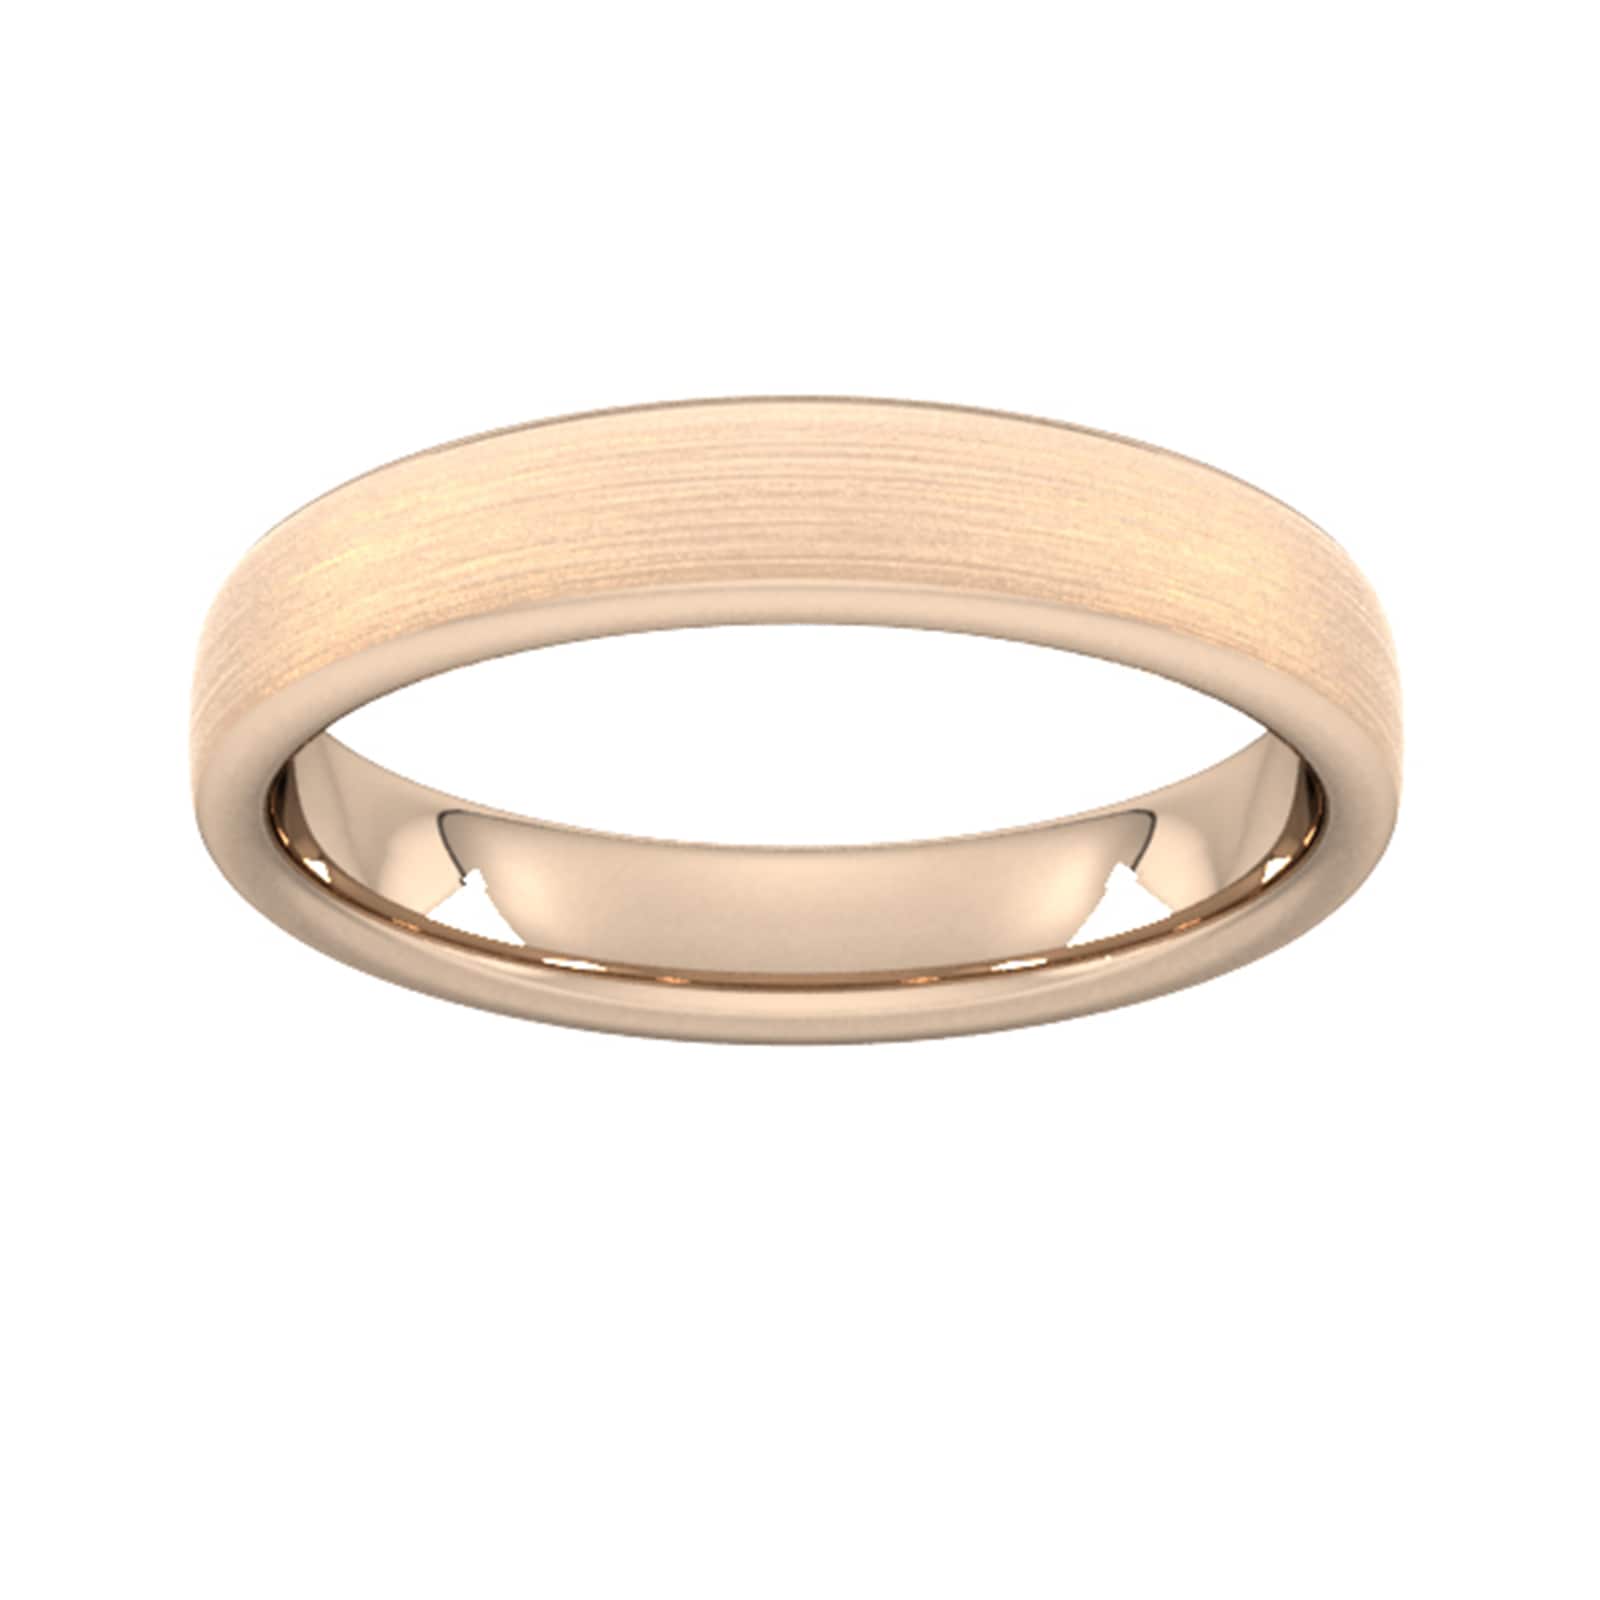 4mm Slight Court Standard Matt Finished Wedding Ring In 18 Carat Rose Gold - Ring Size S